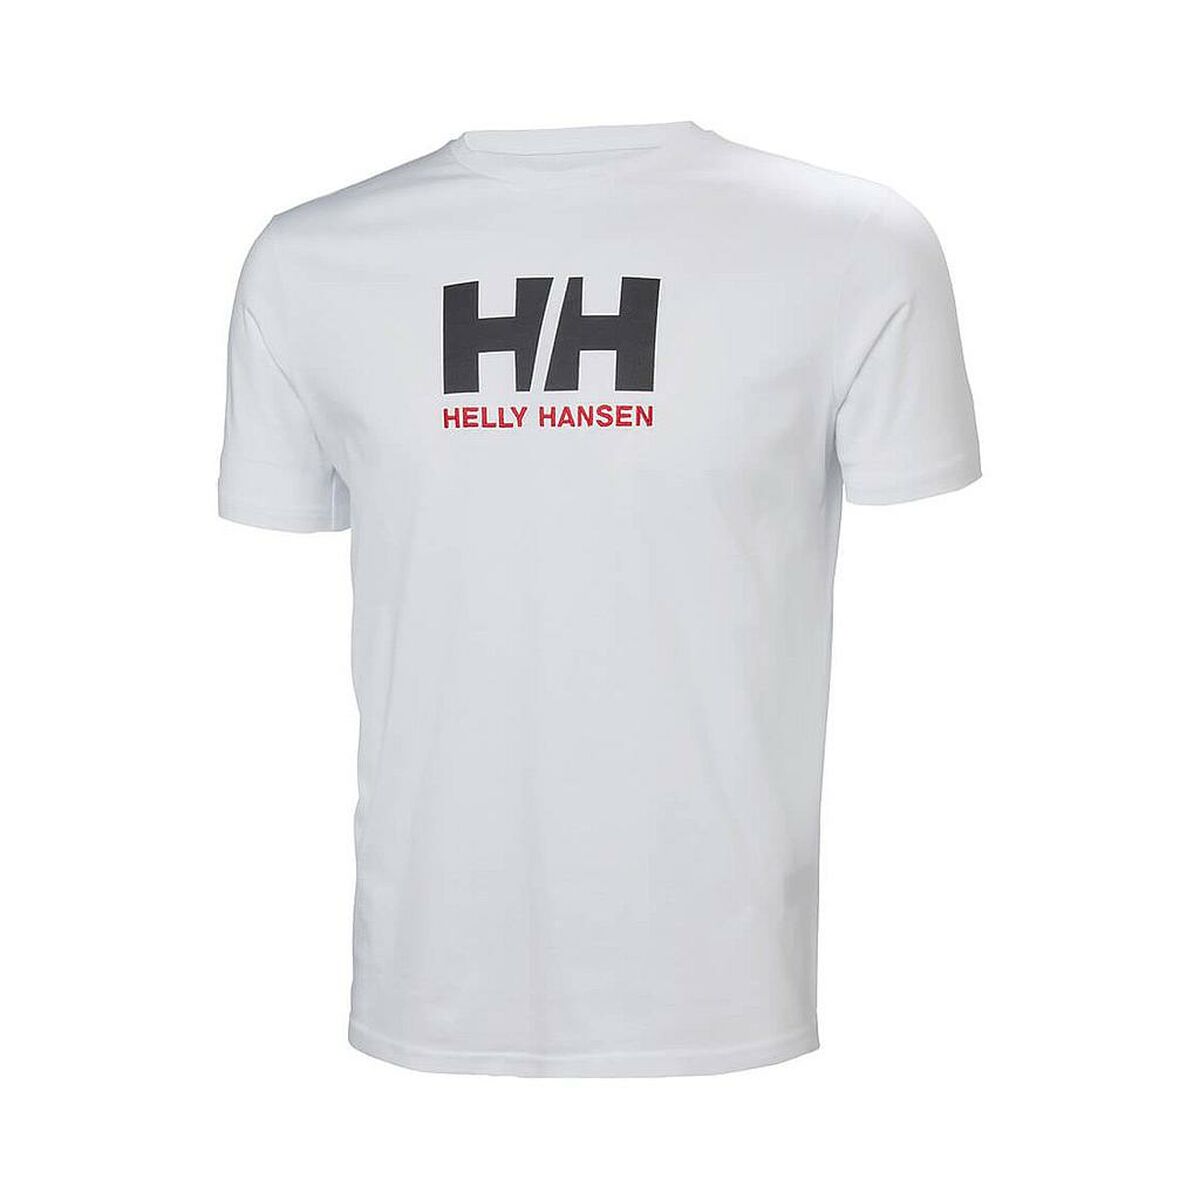 T-shirt à manches courtes homme LOGO Helly Hansen 33979 001  Blanc